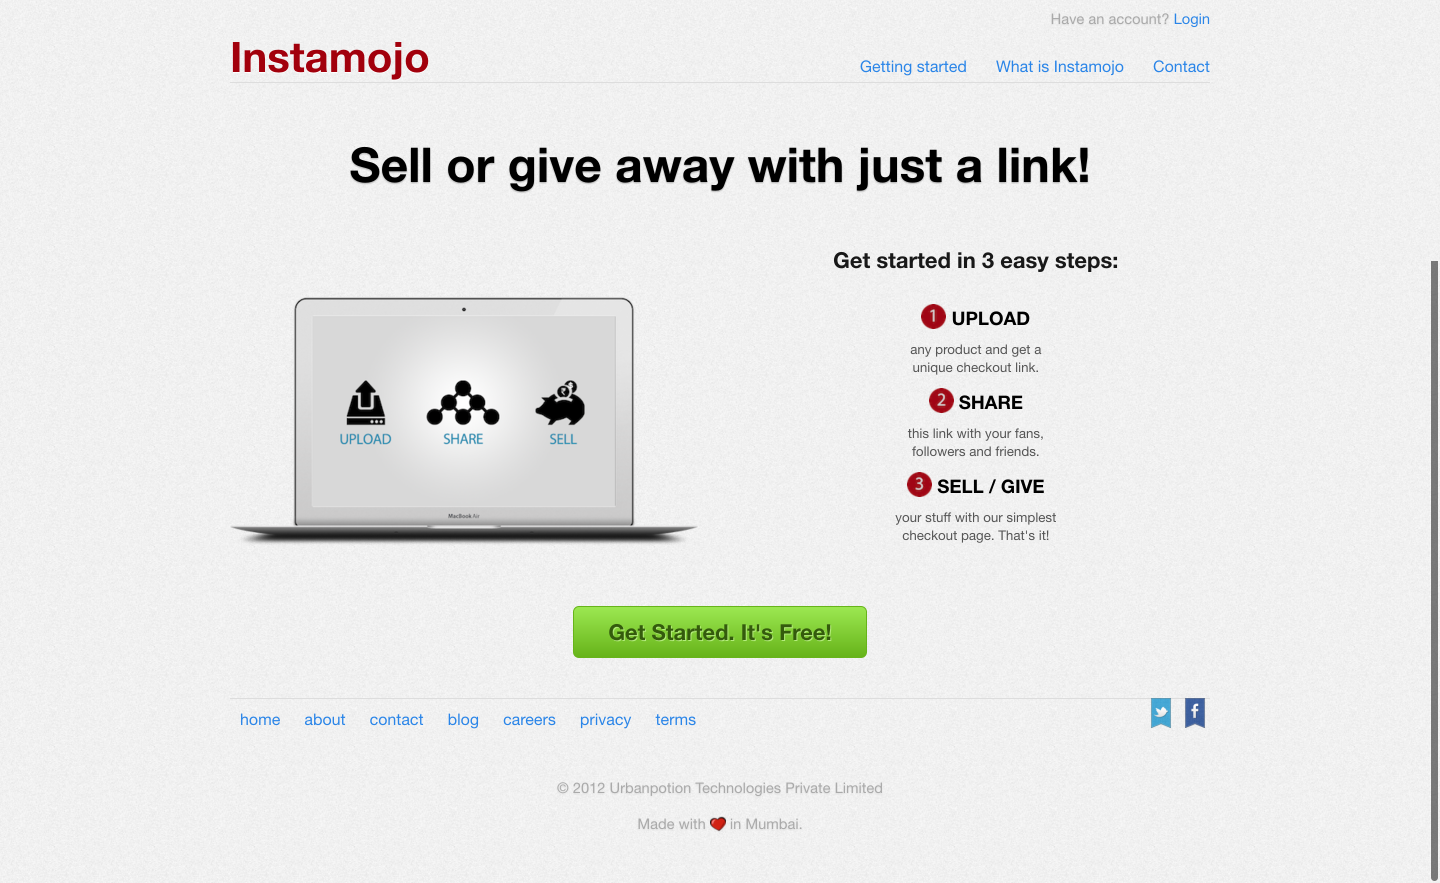 Instamojo Homepage, Early 2012